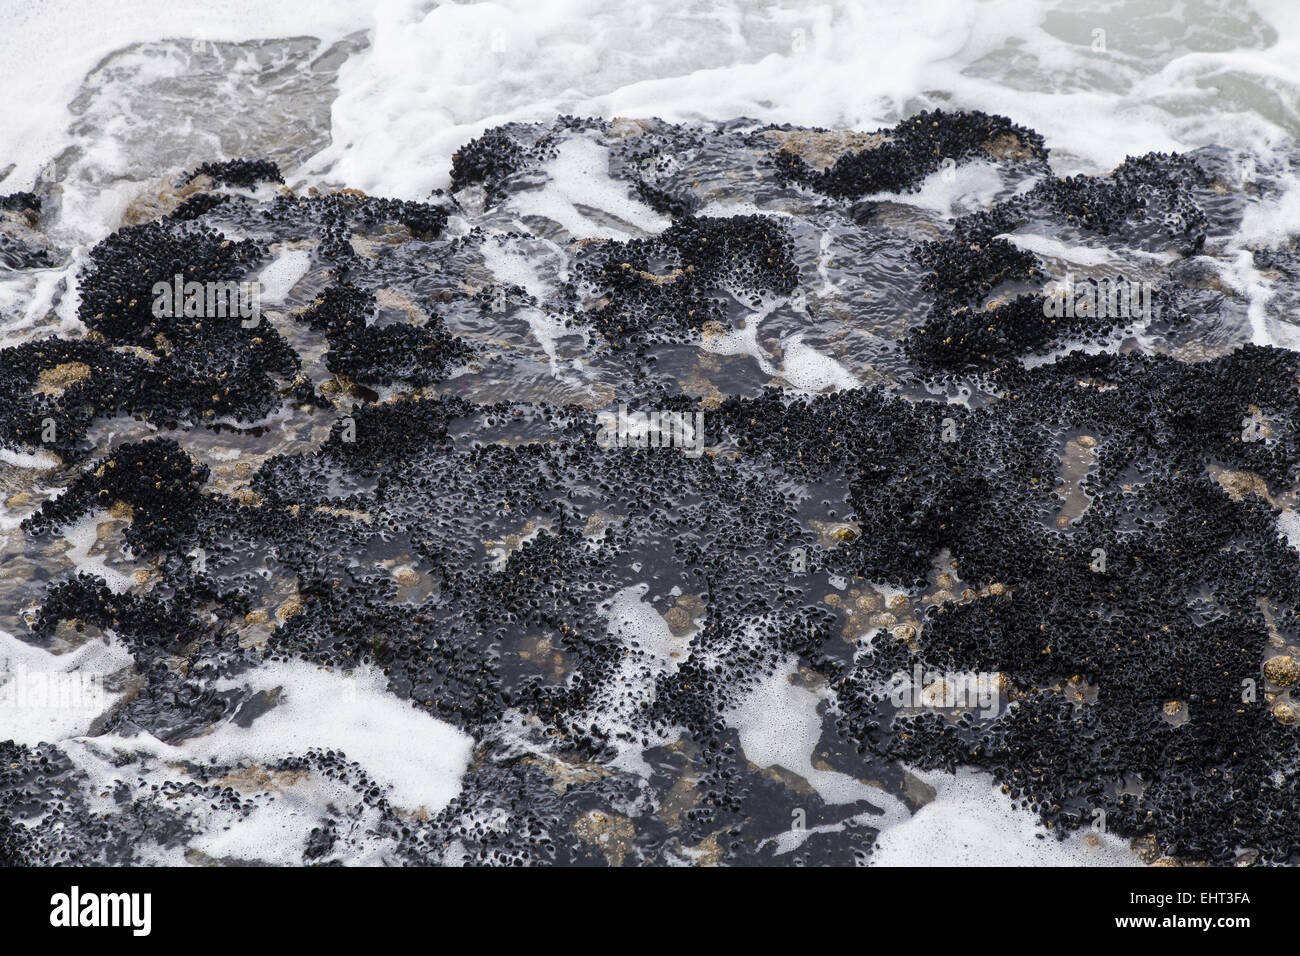 Mussels (Mytilus edulis) on rocks Stock Photo